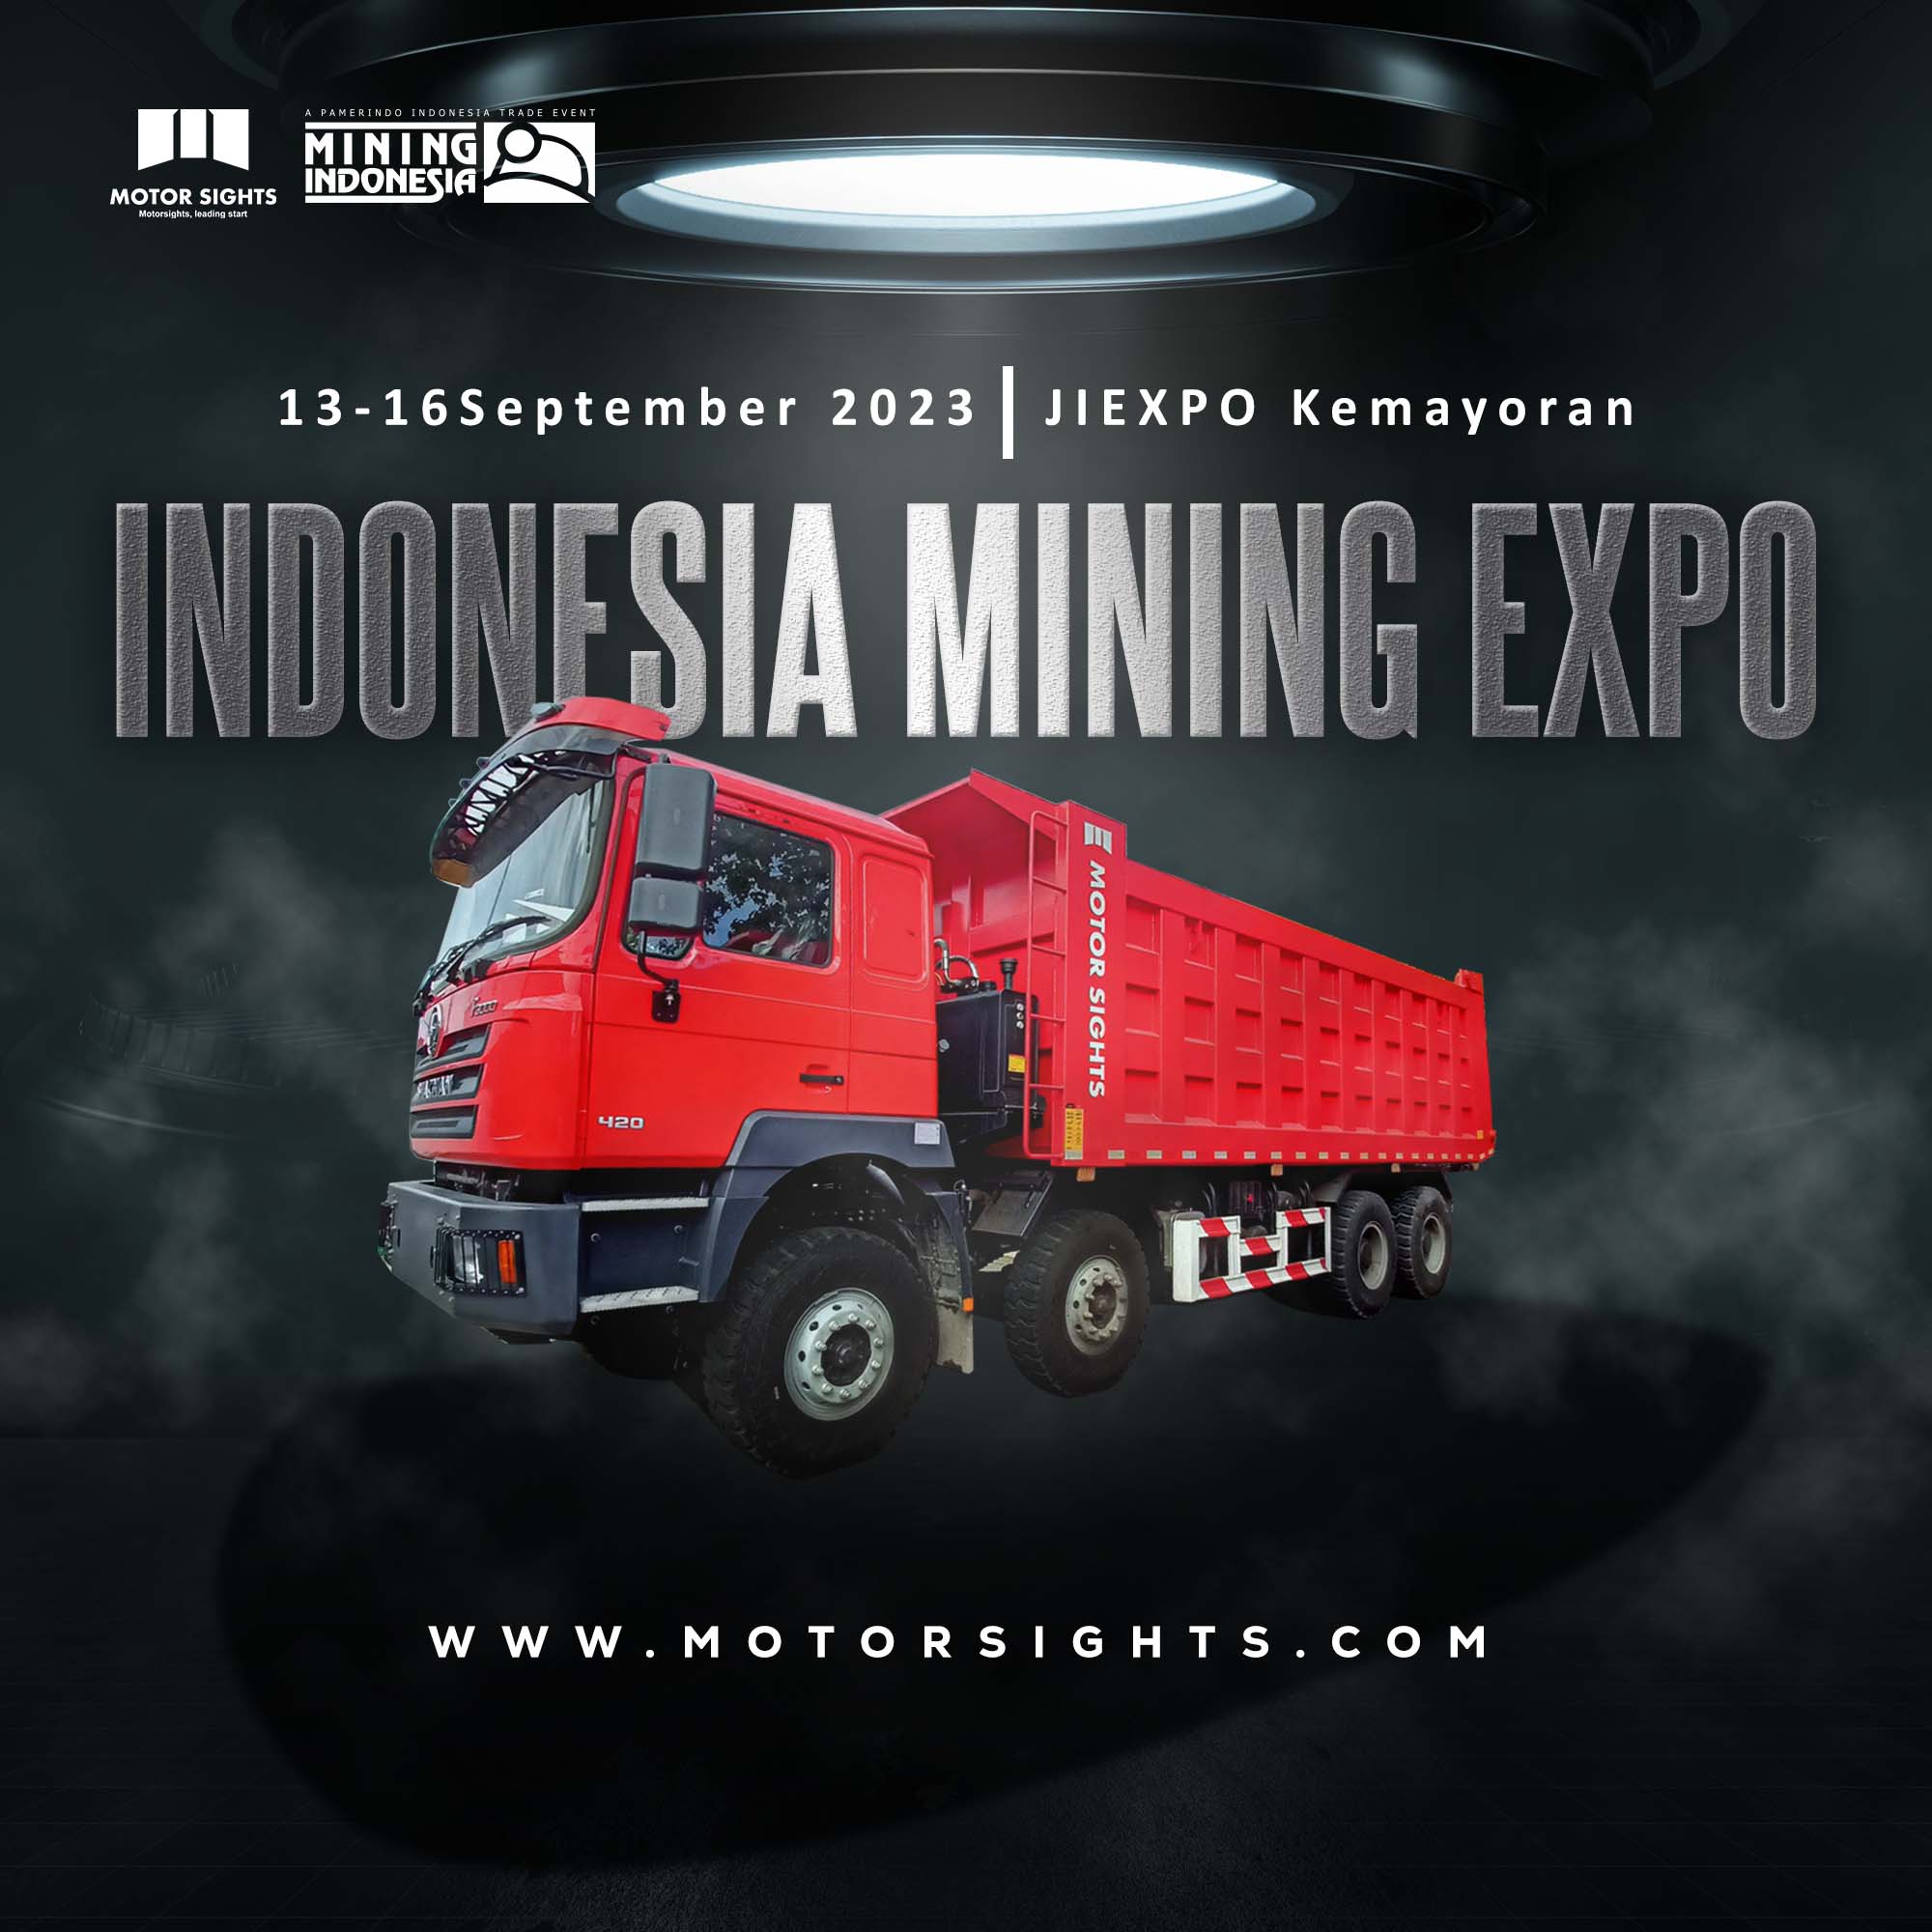 Motor Sights International 在 2023 年印度尼西亚矿业博览会上惊艳亮相